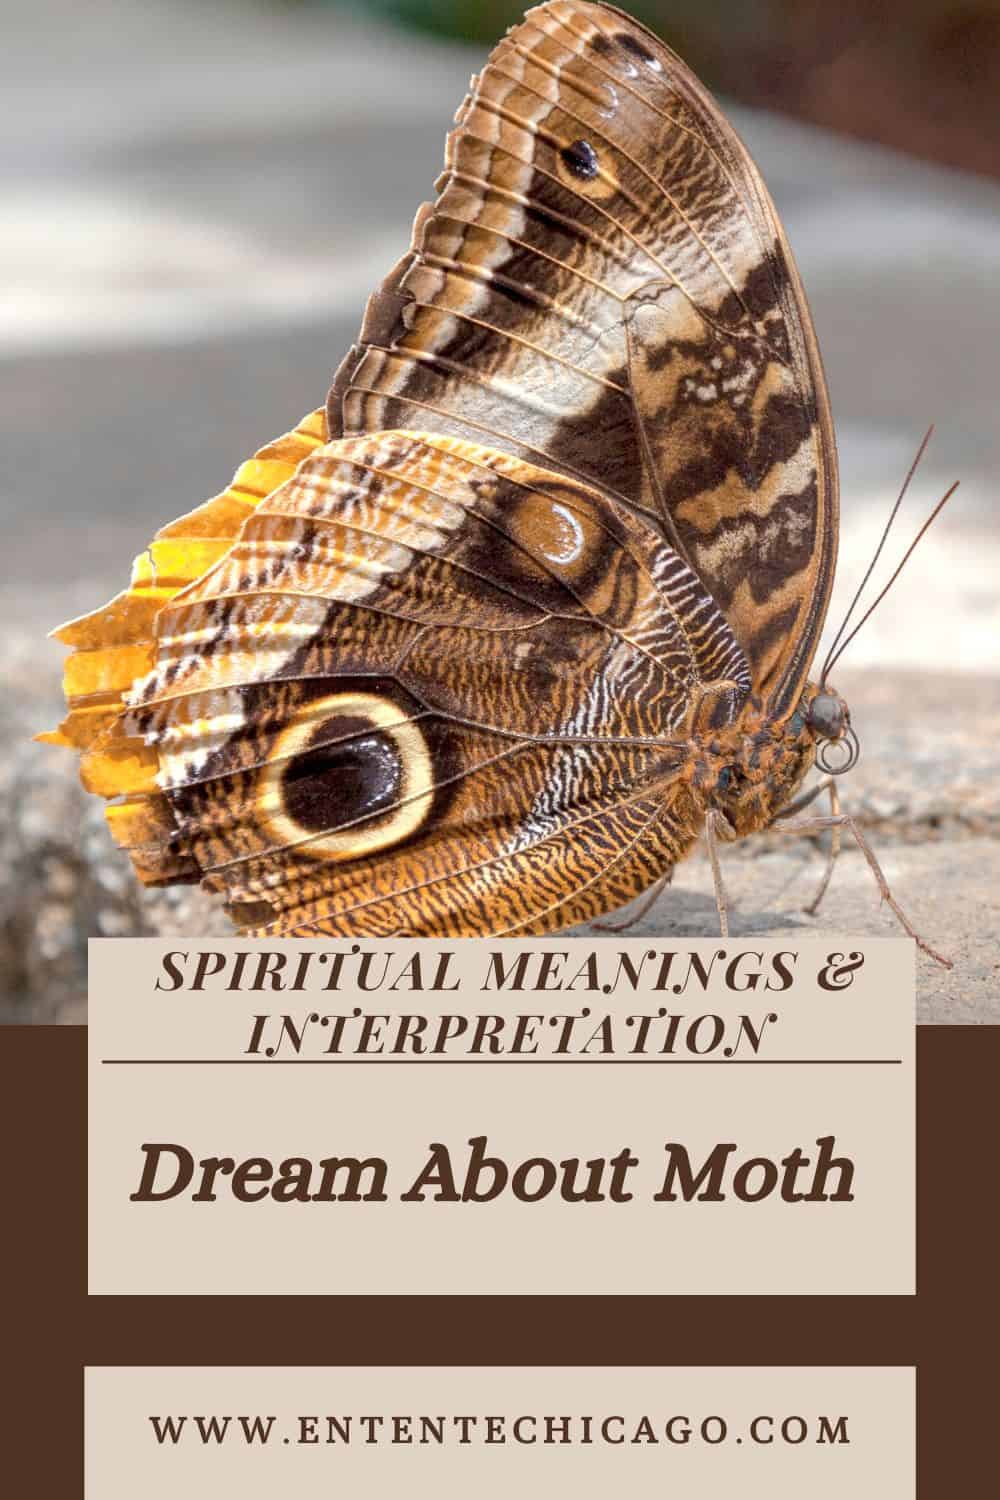 Dream About Moth (Spiritual Meanings & Interpretation)